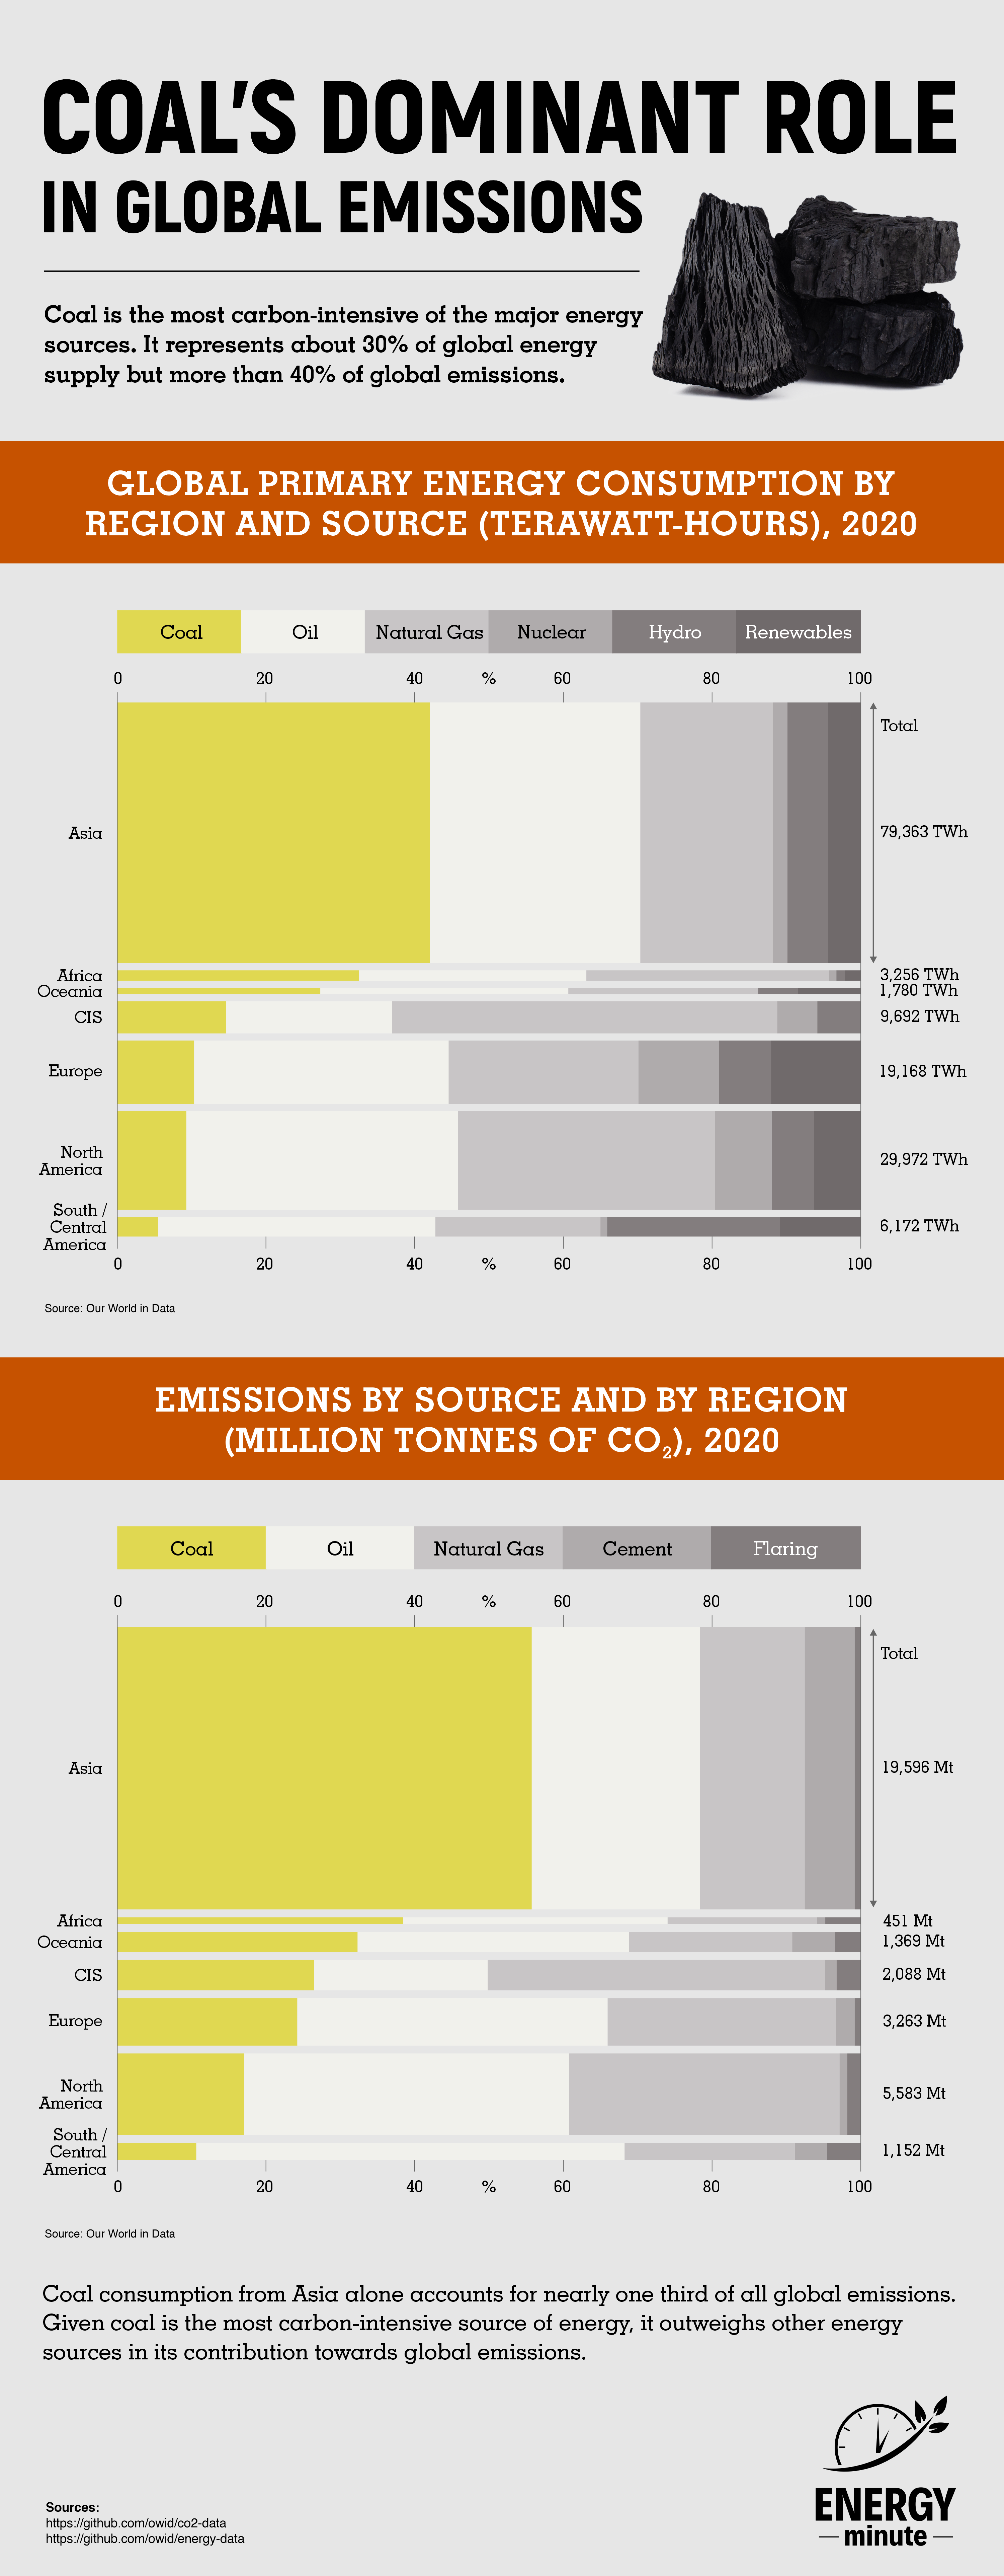 Coal's dominance in global emissions